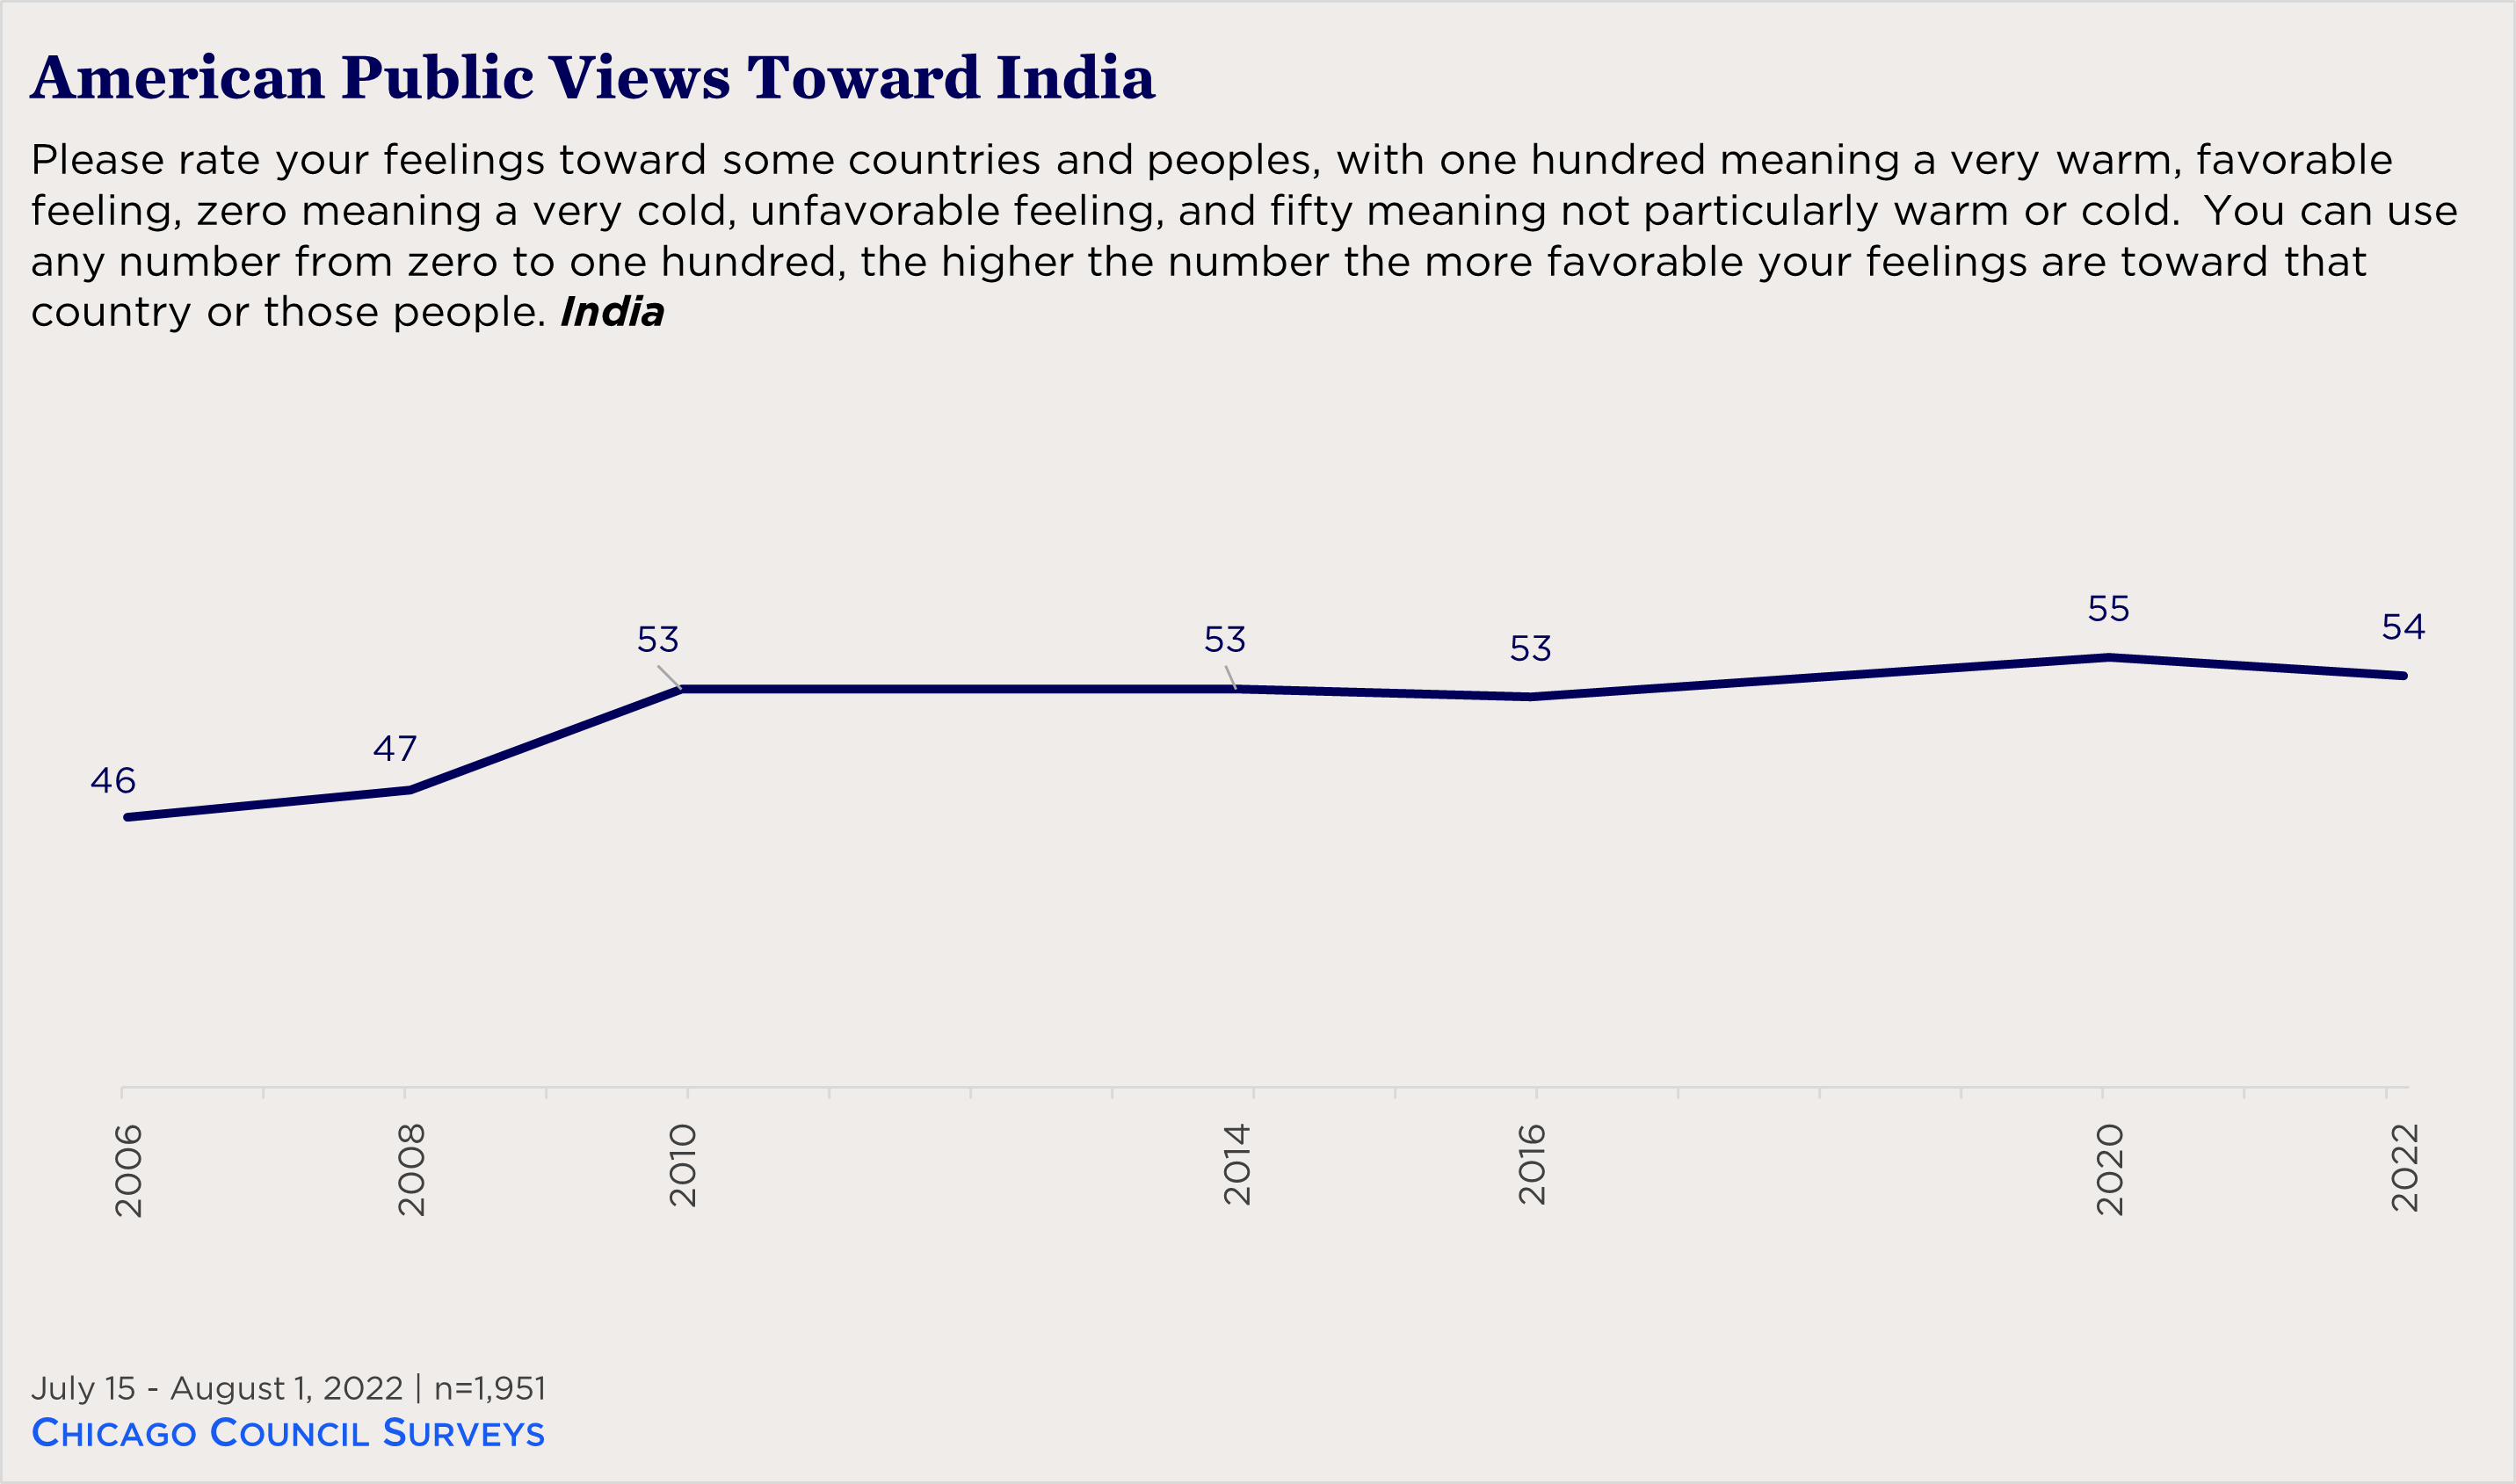 "line chart showing American public views toward India"